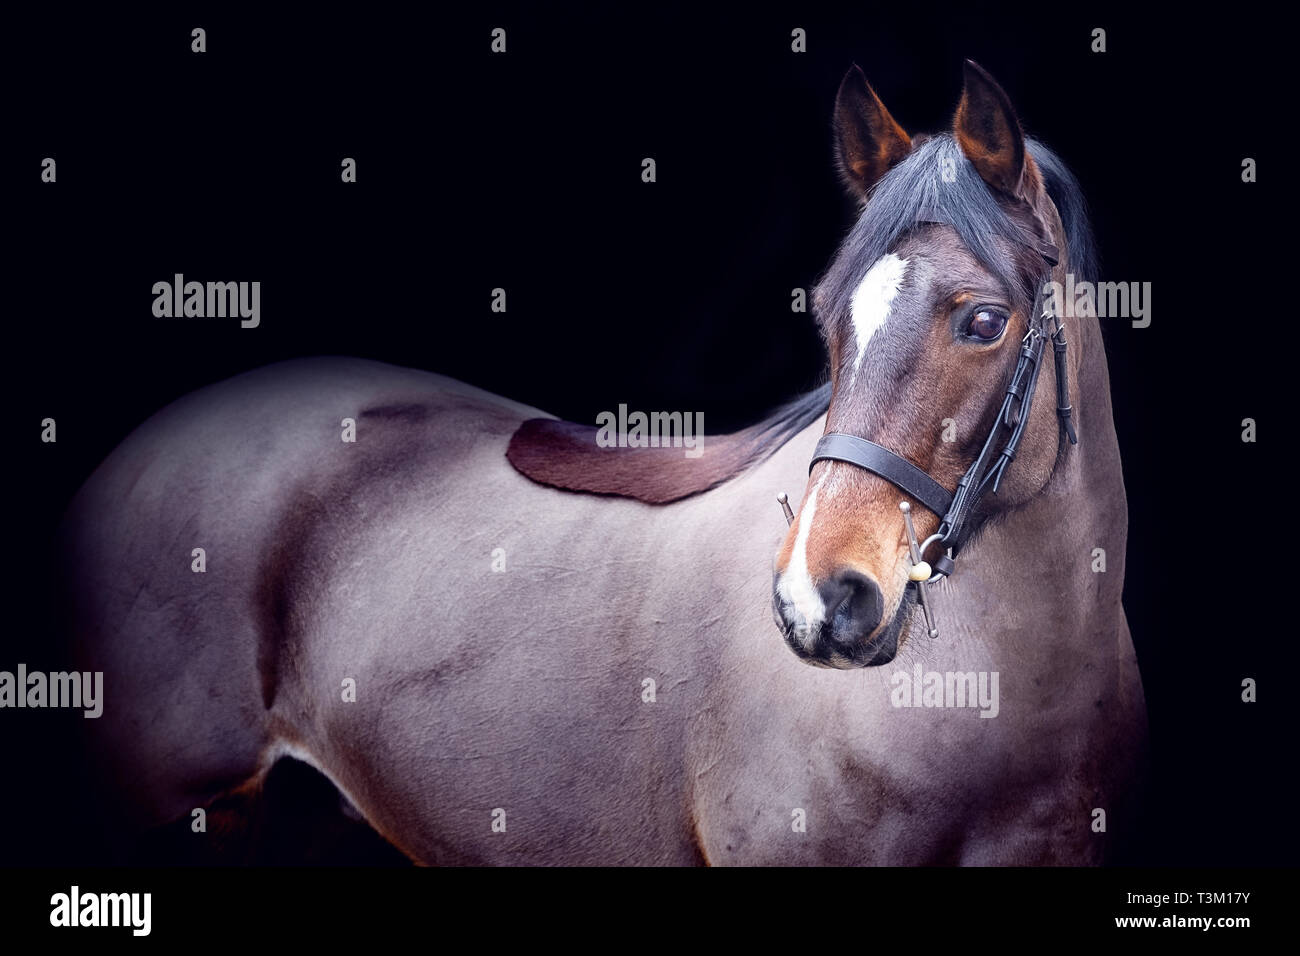 Horse portraits Stock Photo